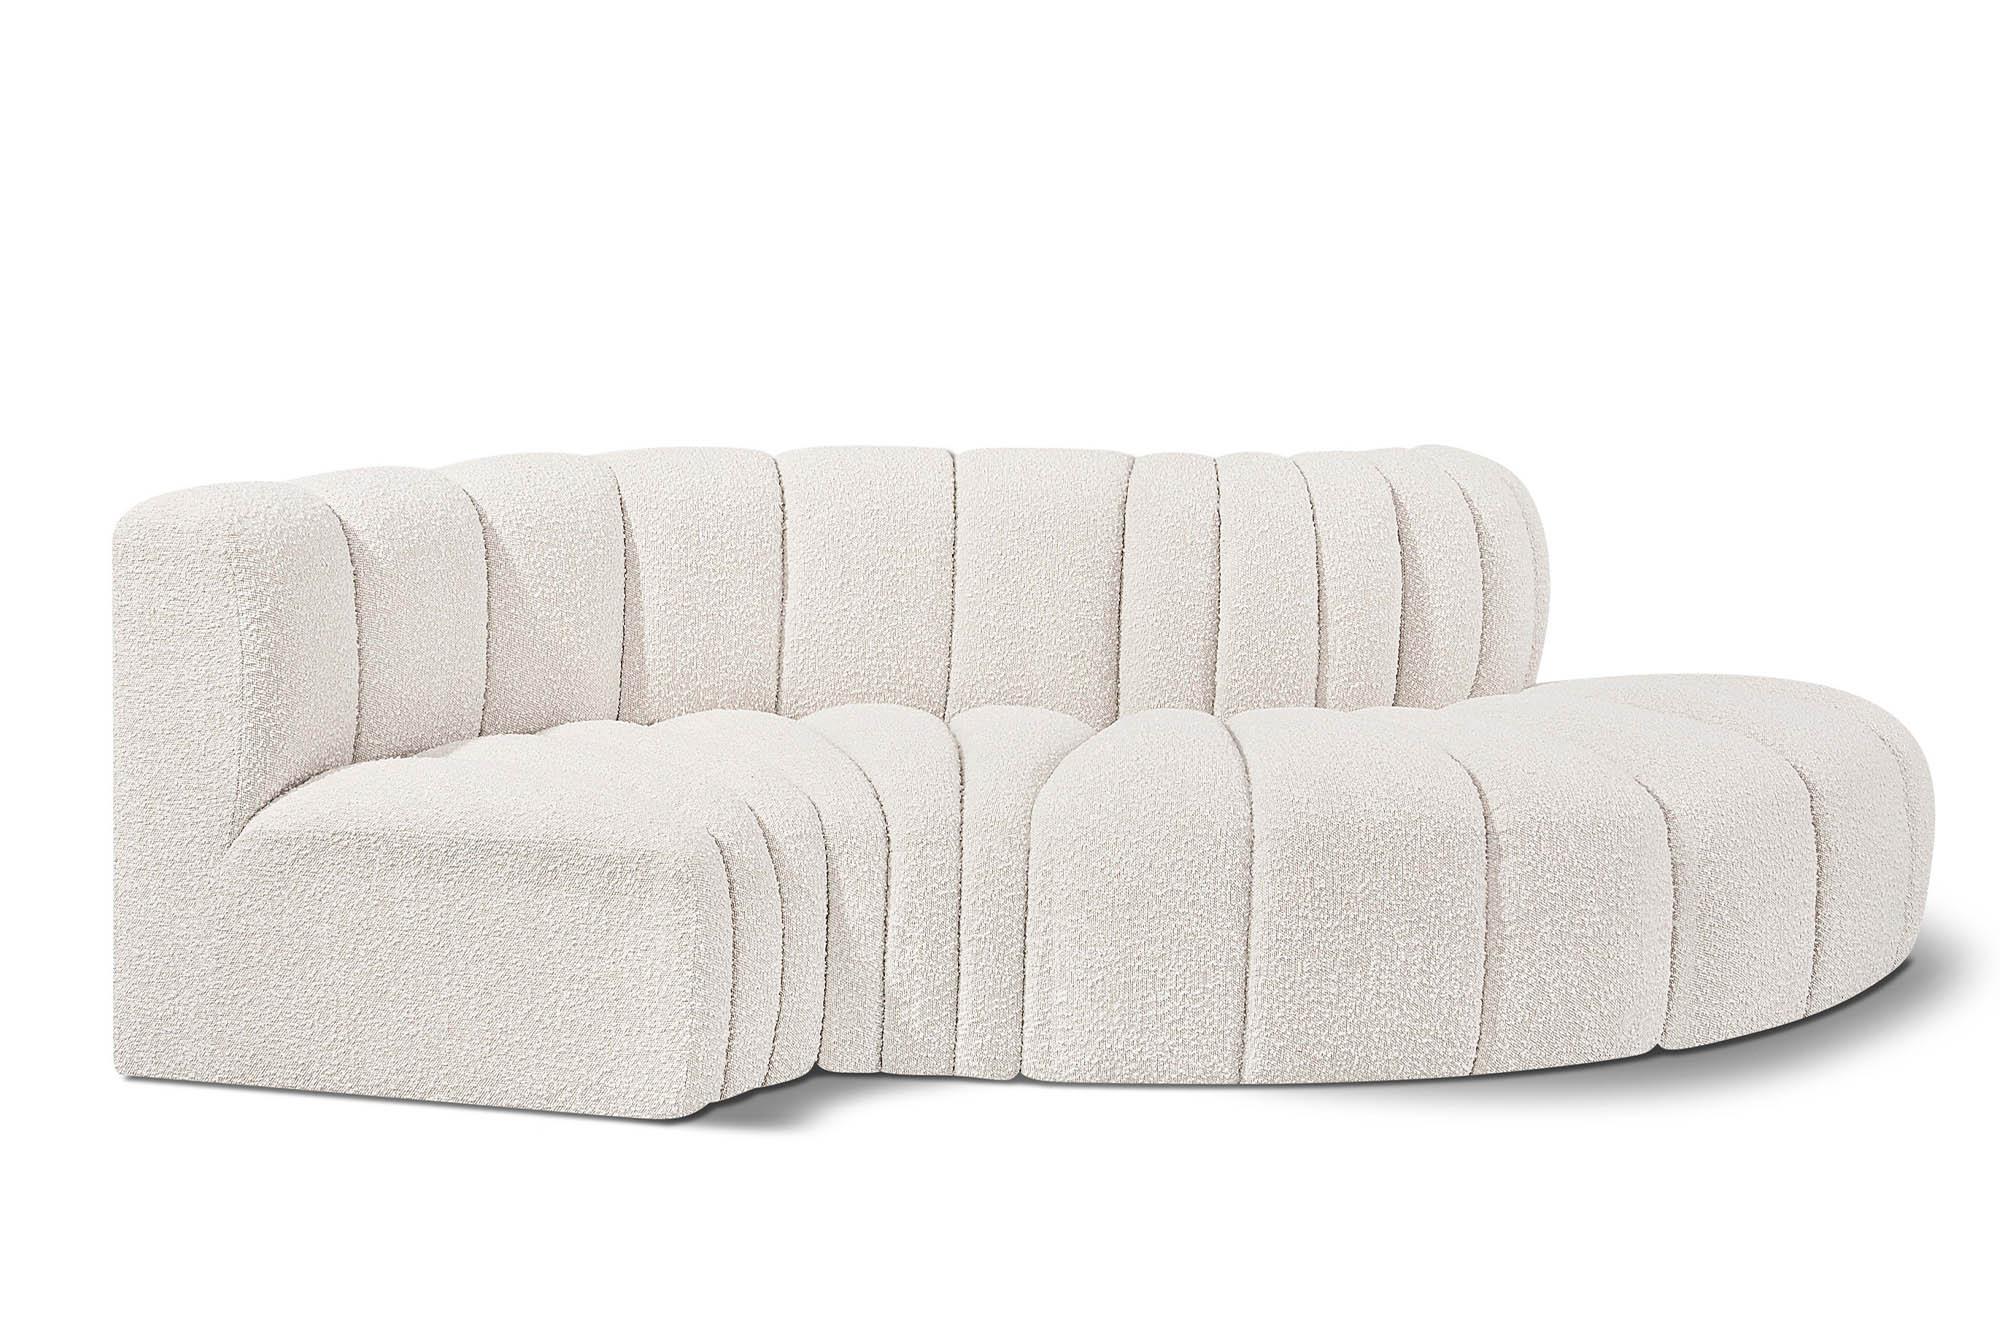 Contemporary, Modern Modular Sectional Sofa ARC 102Cream-S4D 102Cream-S4D in Cream 